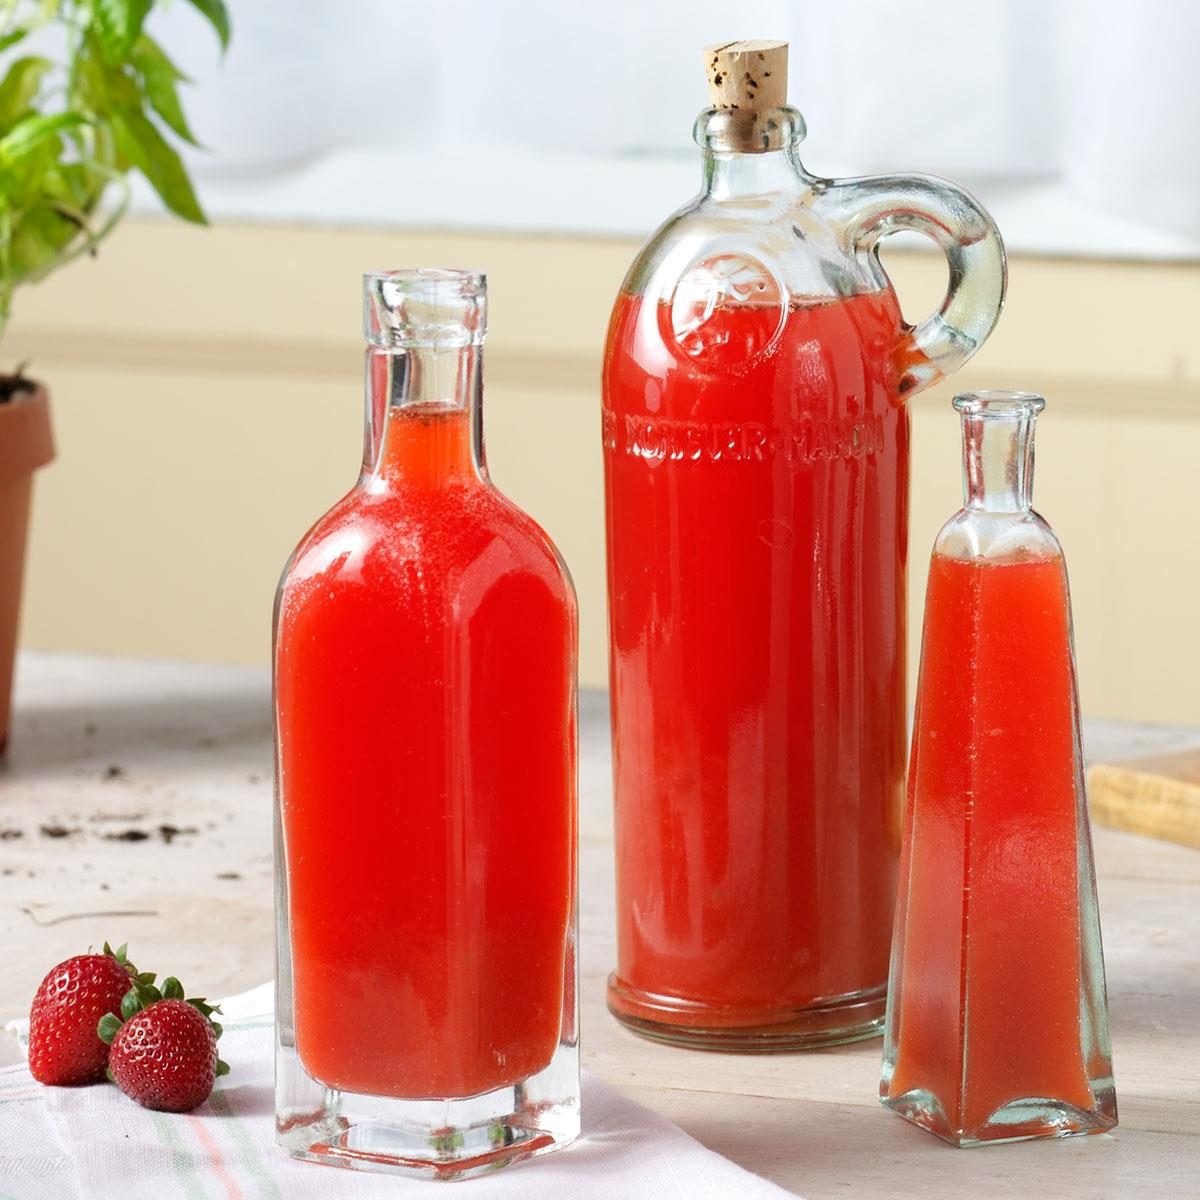 Strawberry-Basil醋